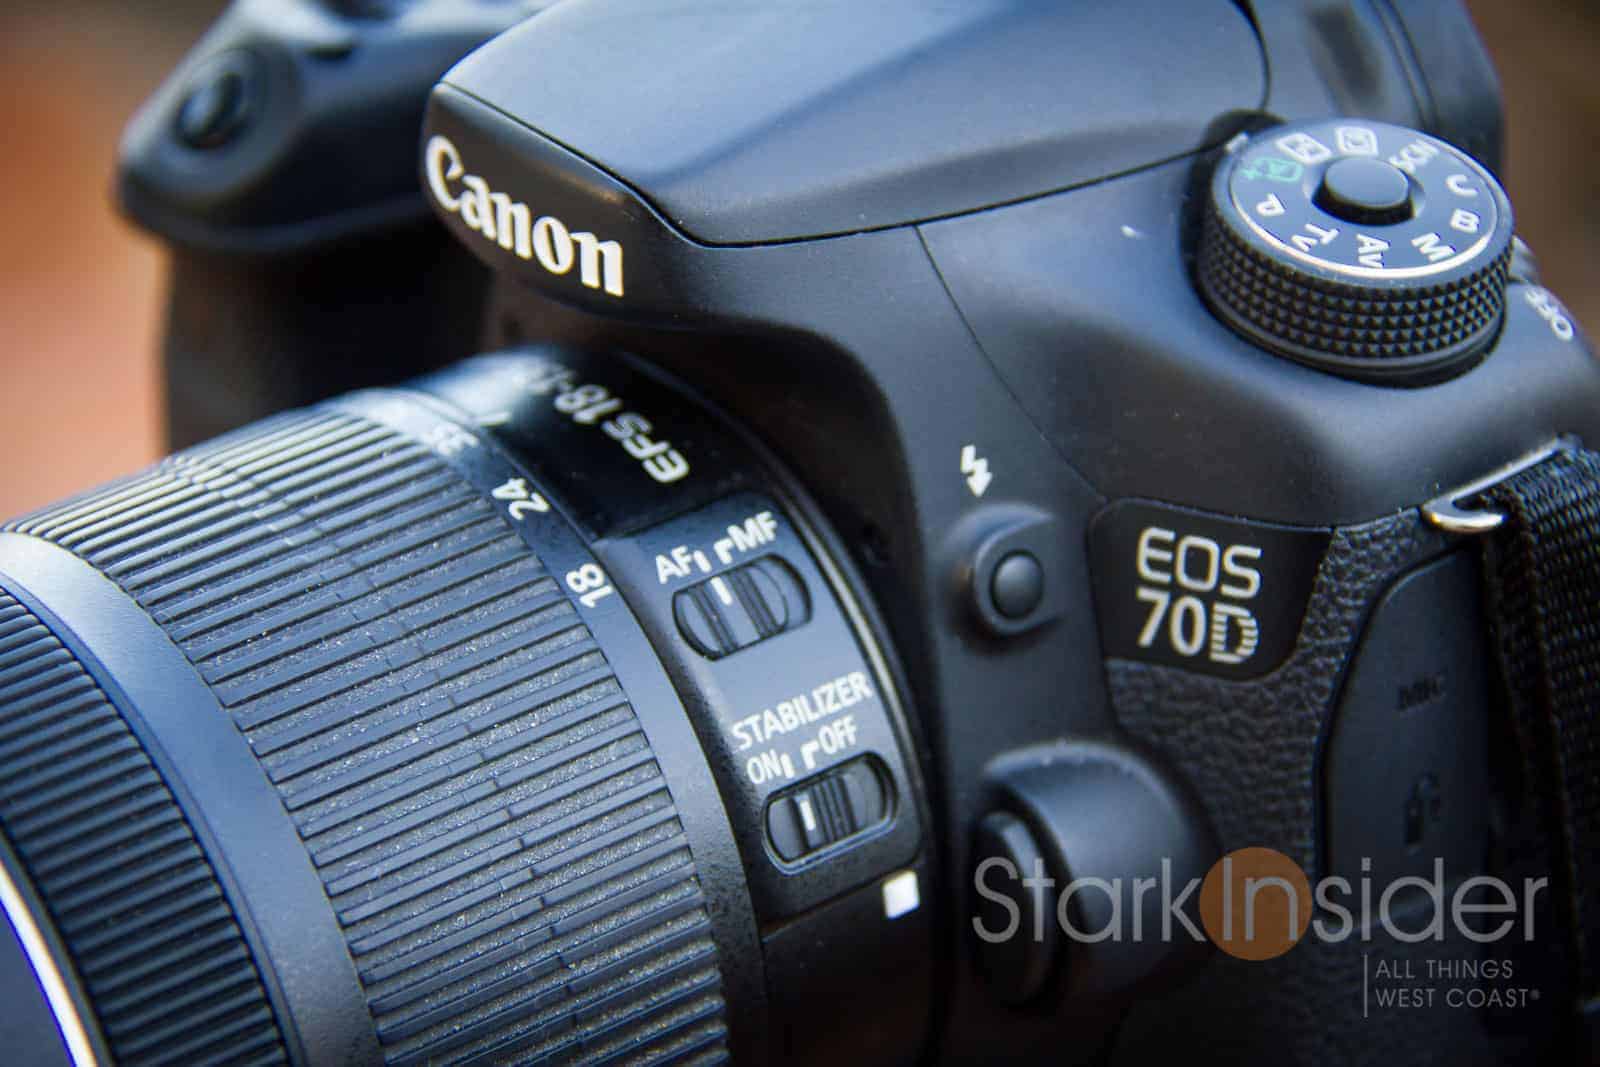 sticker Vaag lucht DSLR Video: Canon EOS 70D with Canon 18-135mm STM lens a winner (Samples) |  Stark Insider